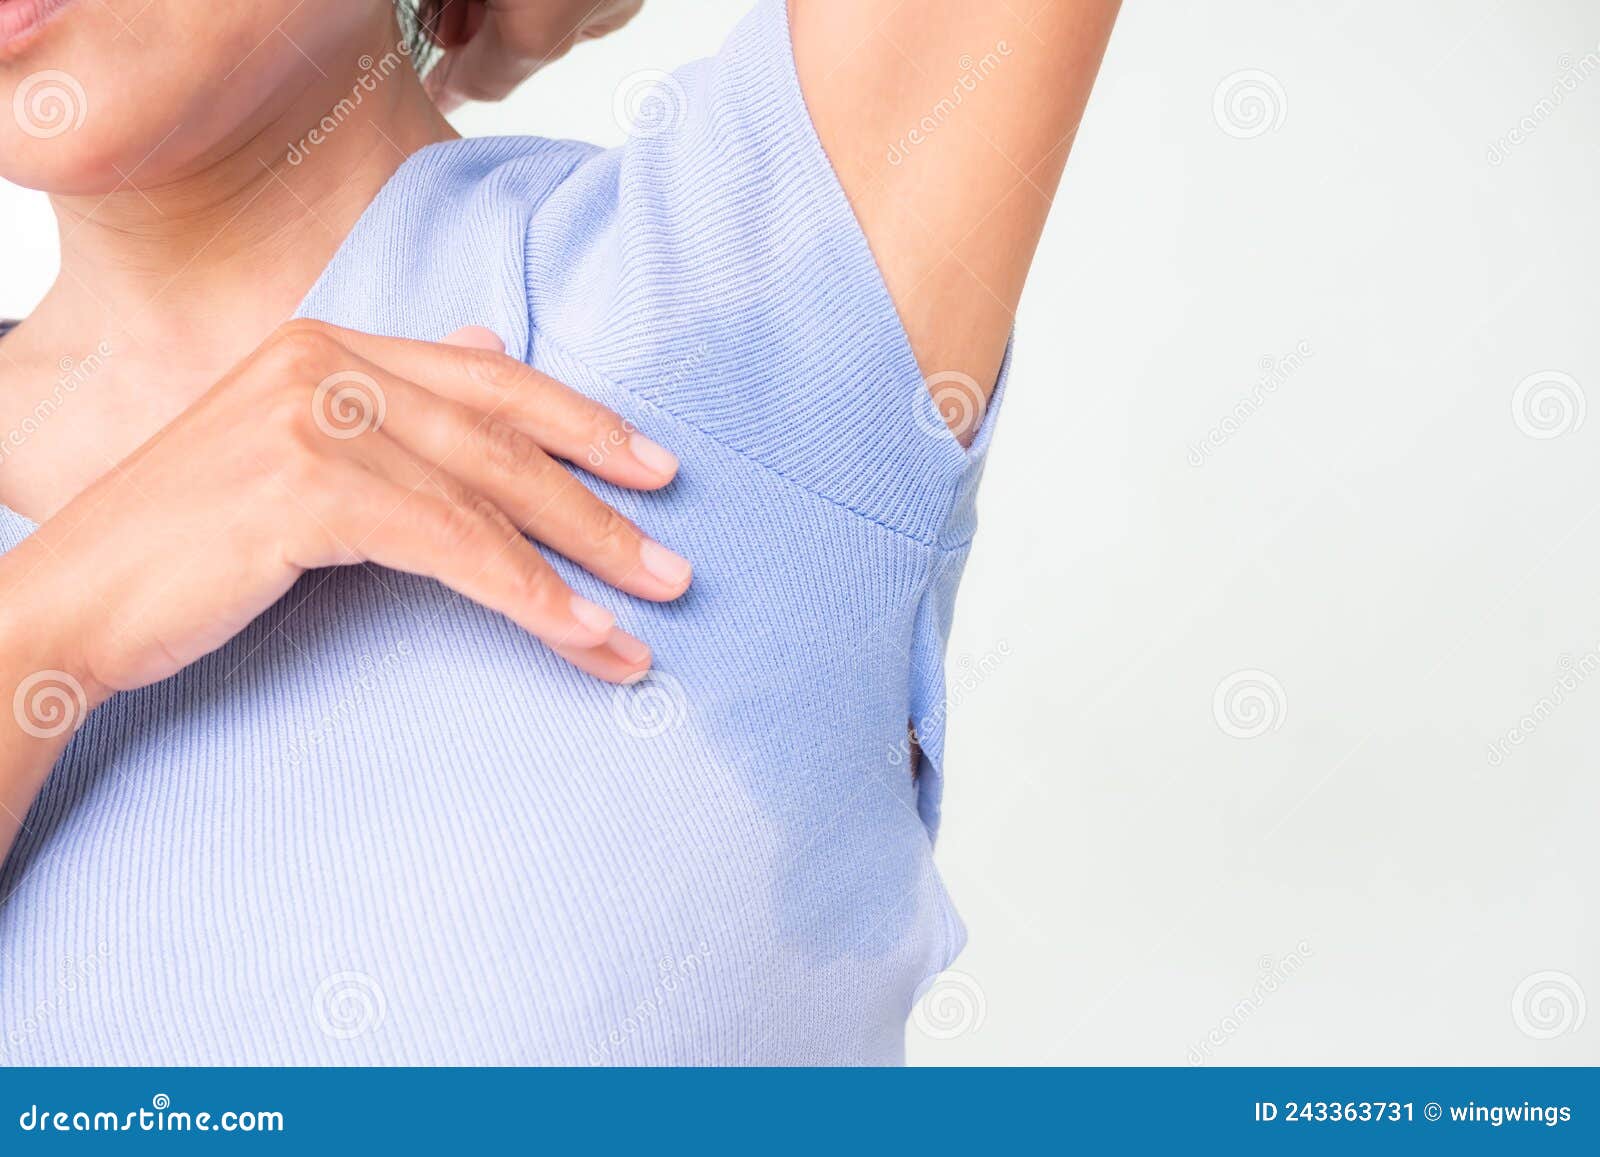 woman wet shirt underarm close up